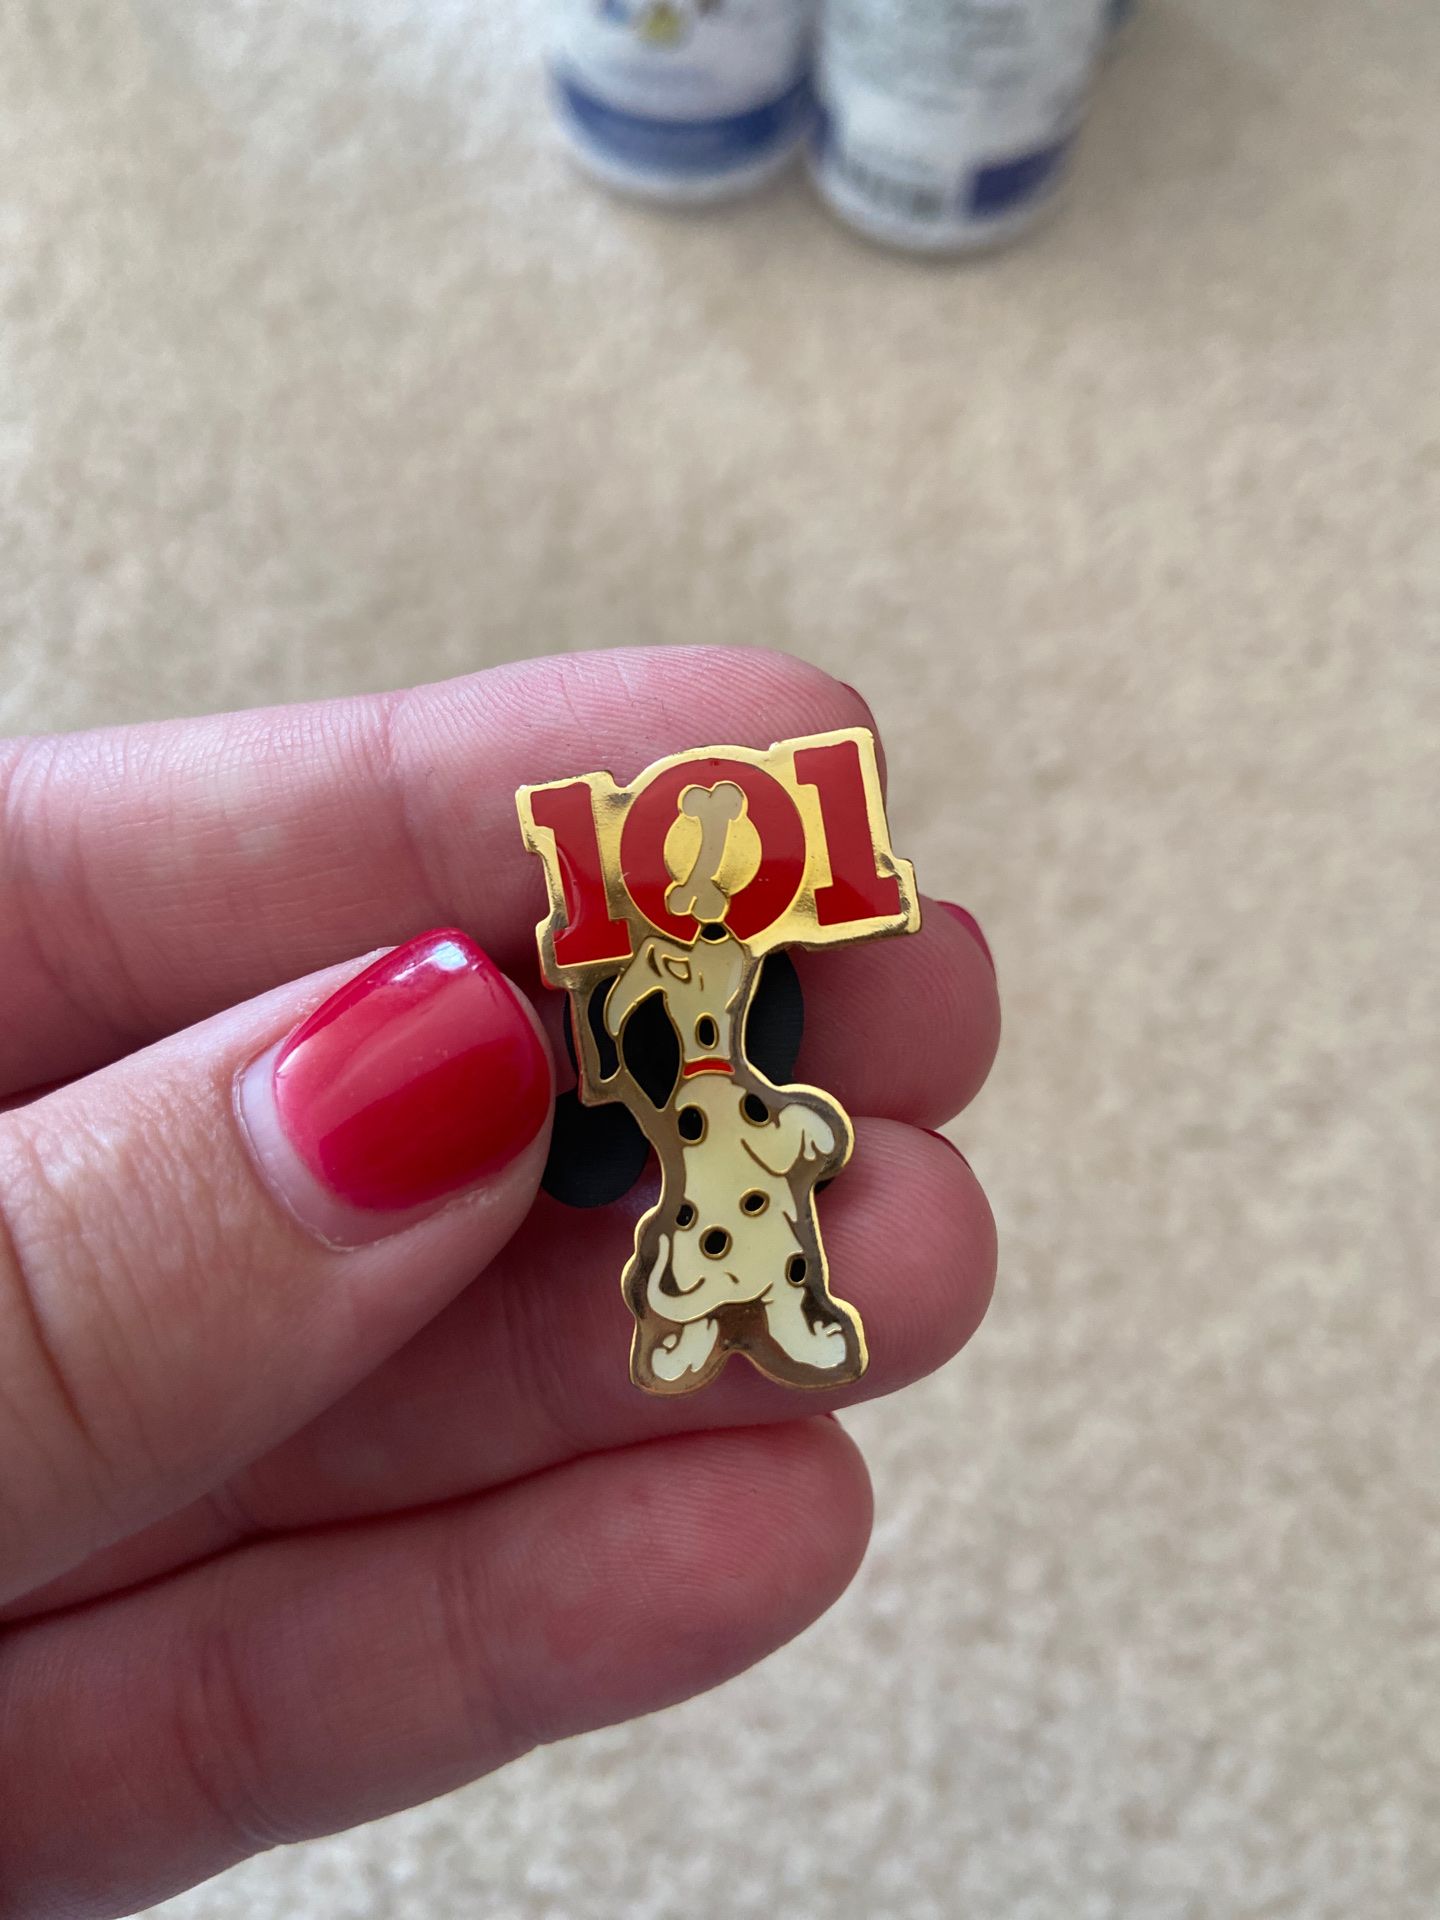 101 Dalmatians authentic Disney trading pin